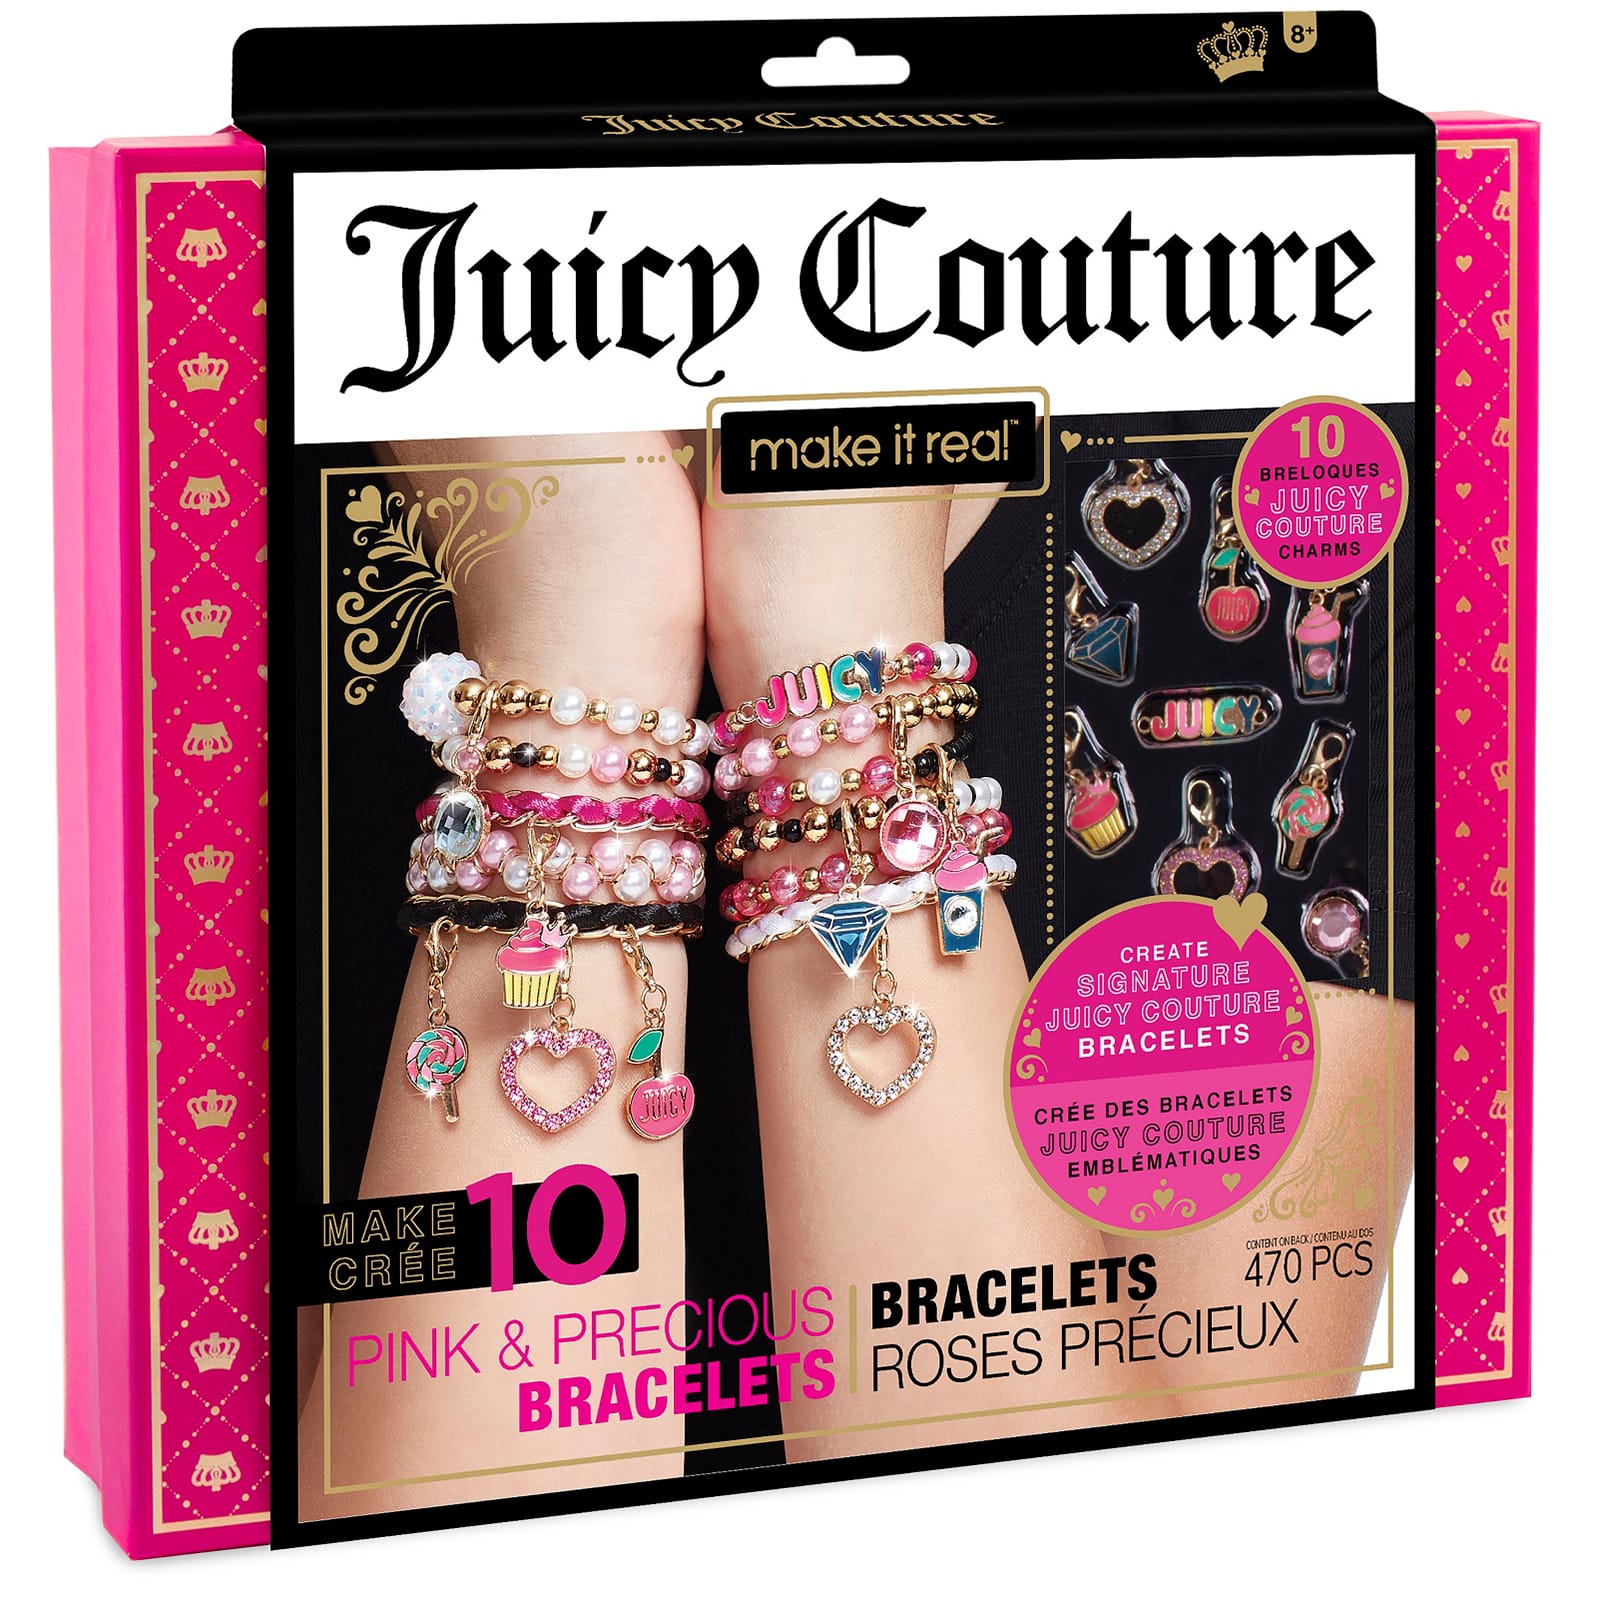 Juicy Couture Bracelet Kit! #juicycouture #juicy #juicybracelet #micha